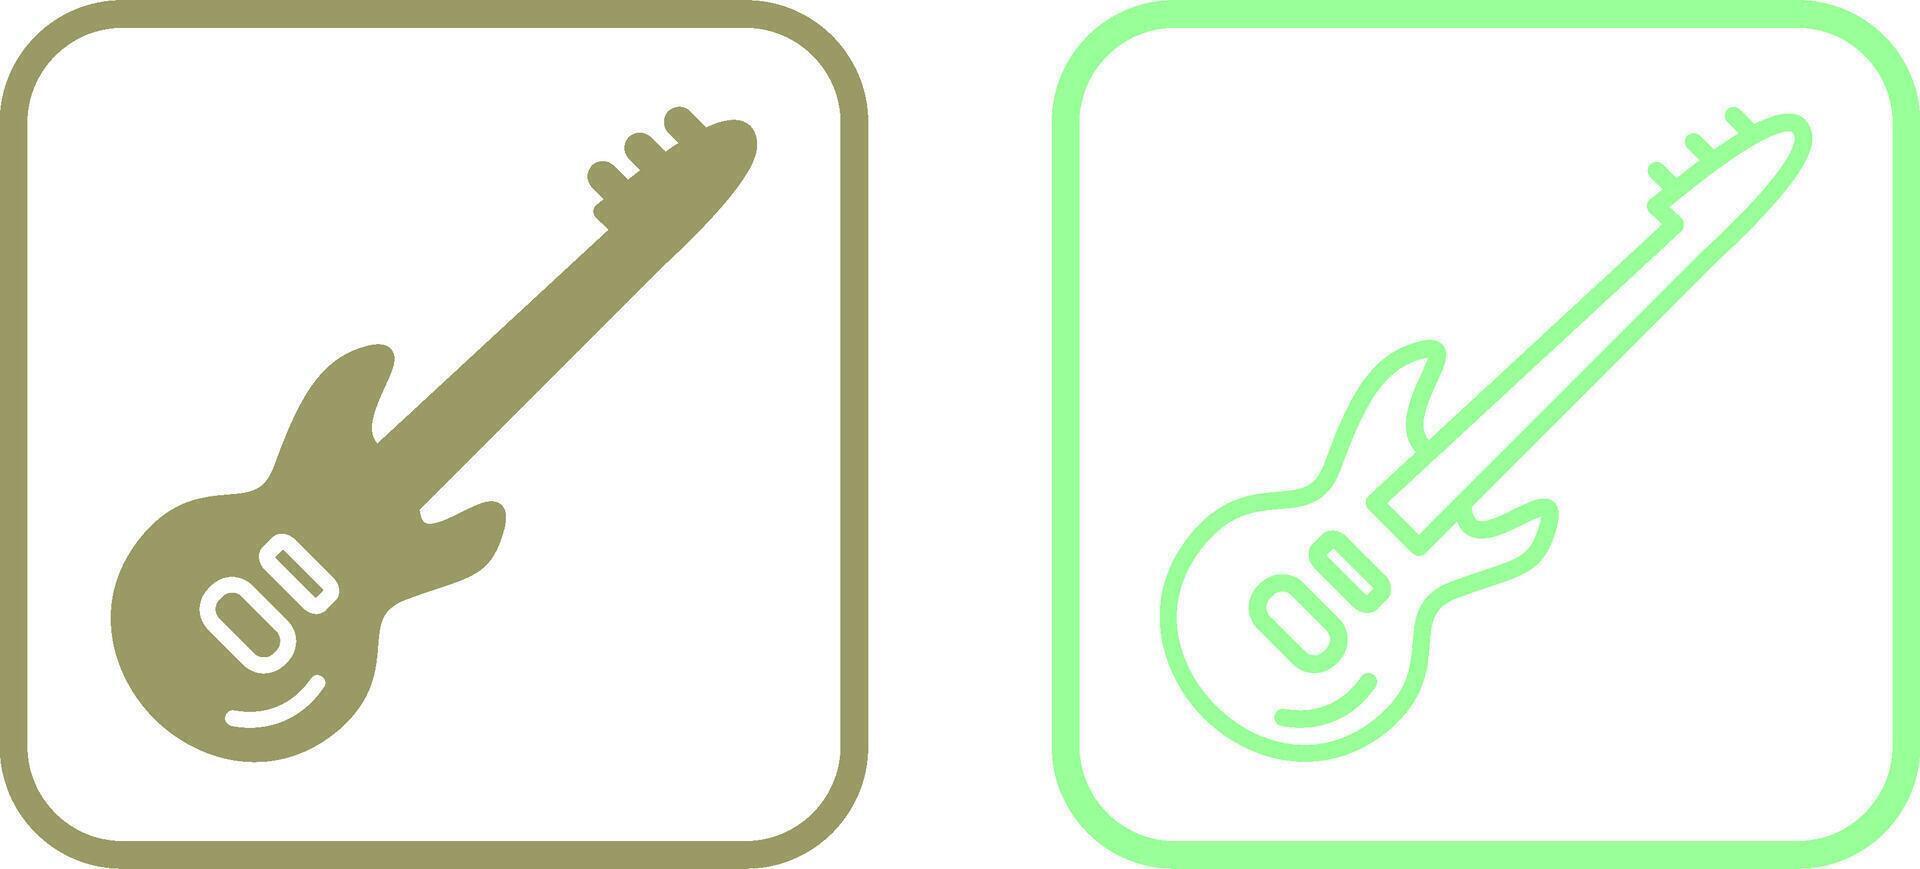 gitarr vektor ikon